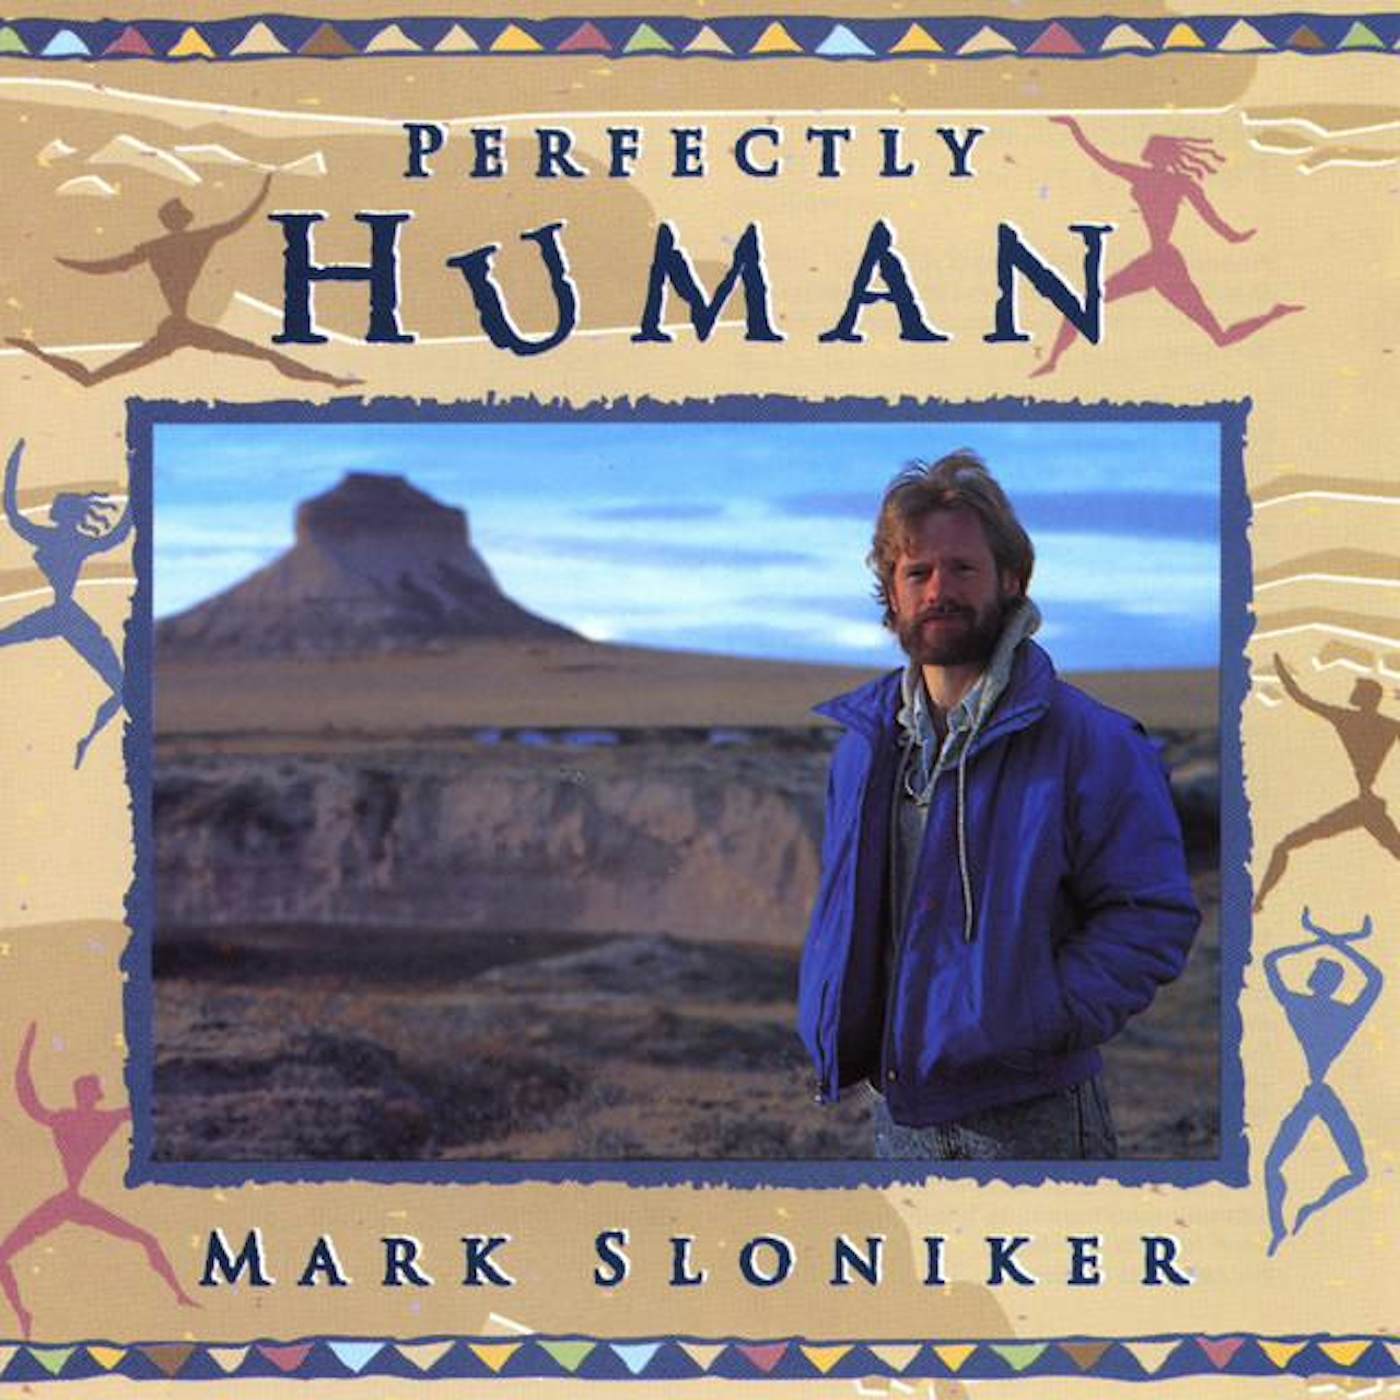 Mark Sloniker